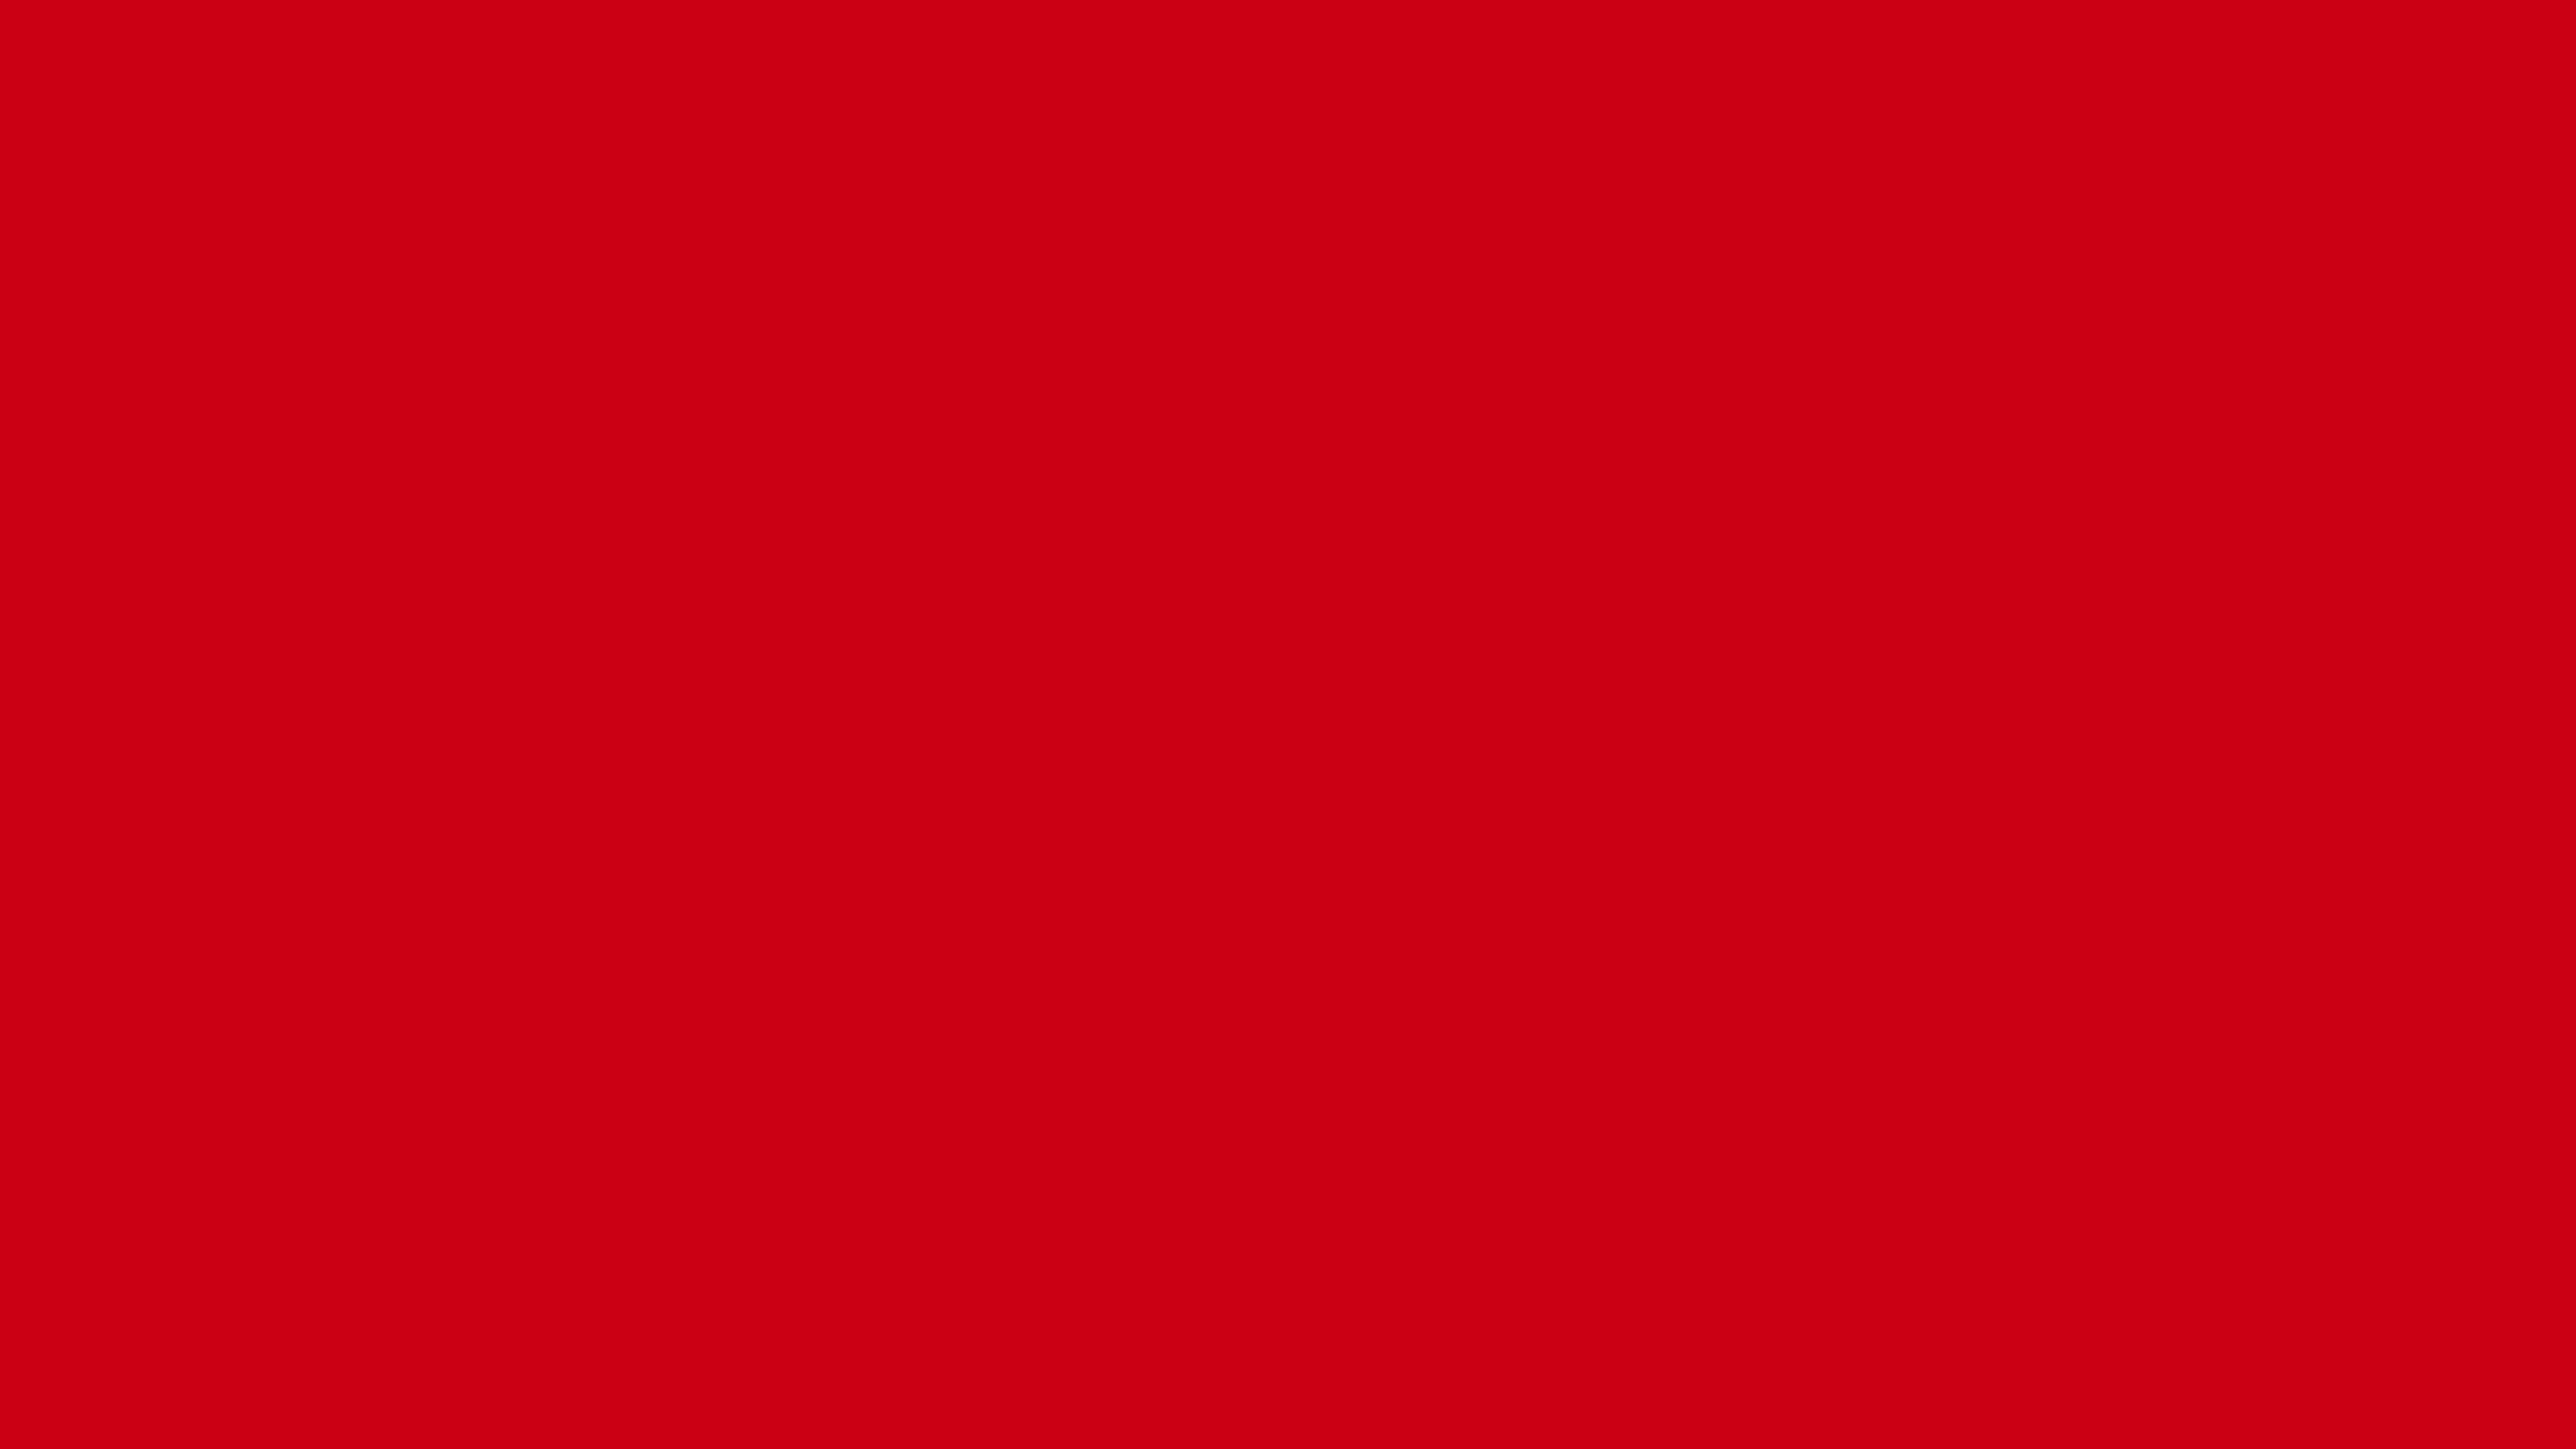 7680x4320 Harvard Crimson Solid Color Background